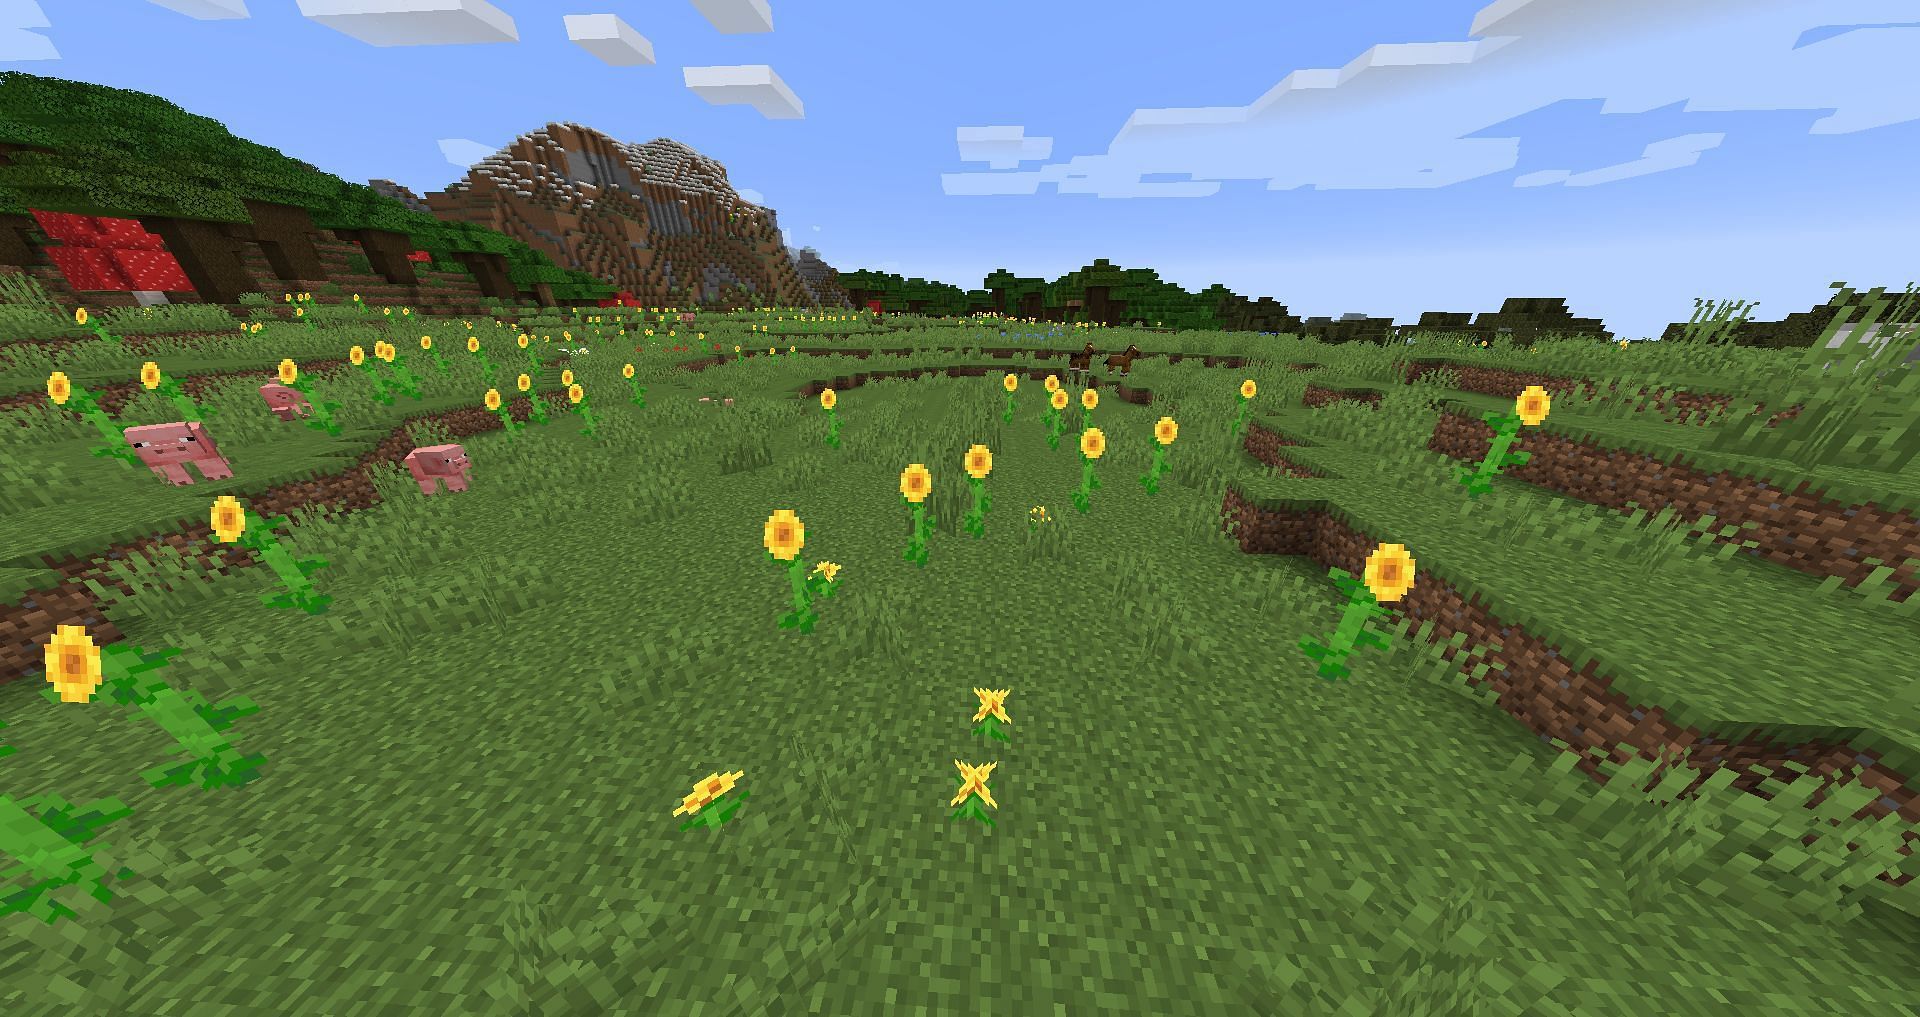 Sunflowers in Sunflower Plains (Image via Minecraft Wiki)